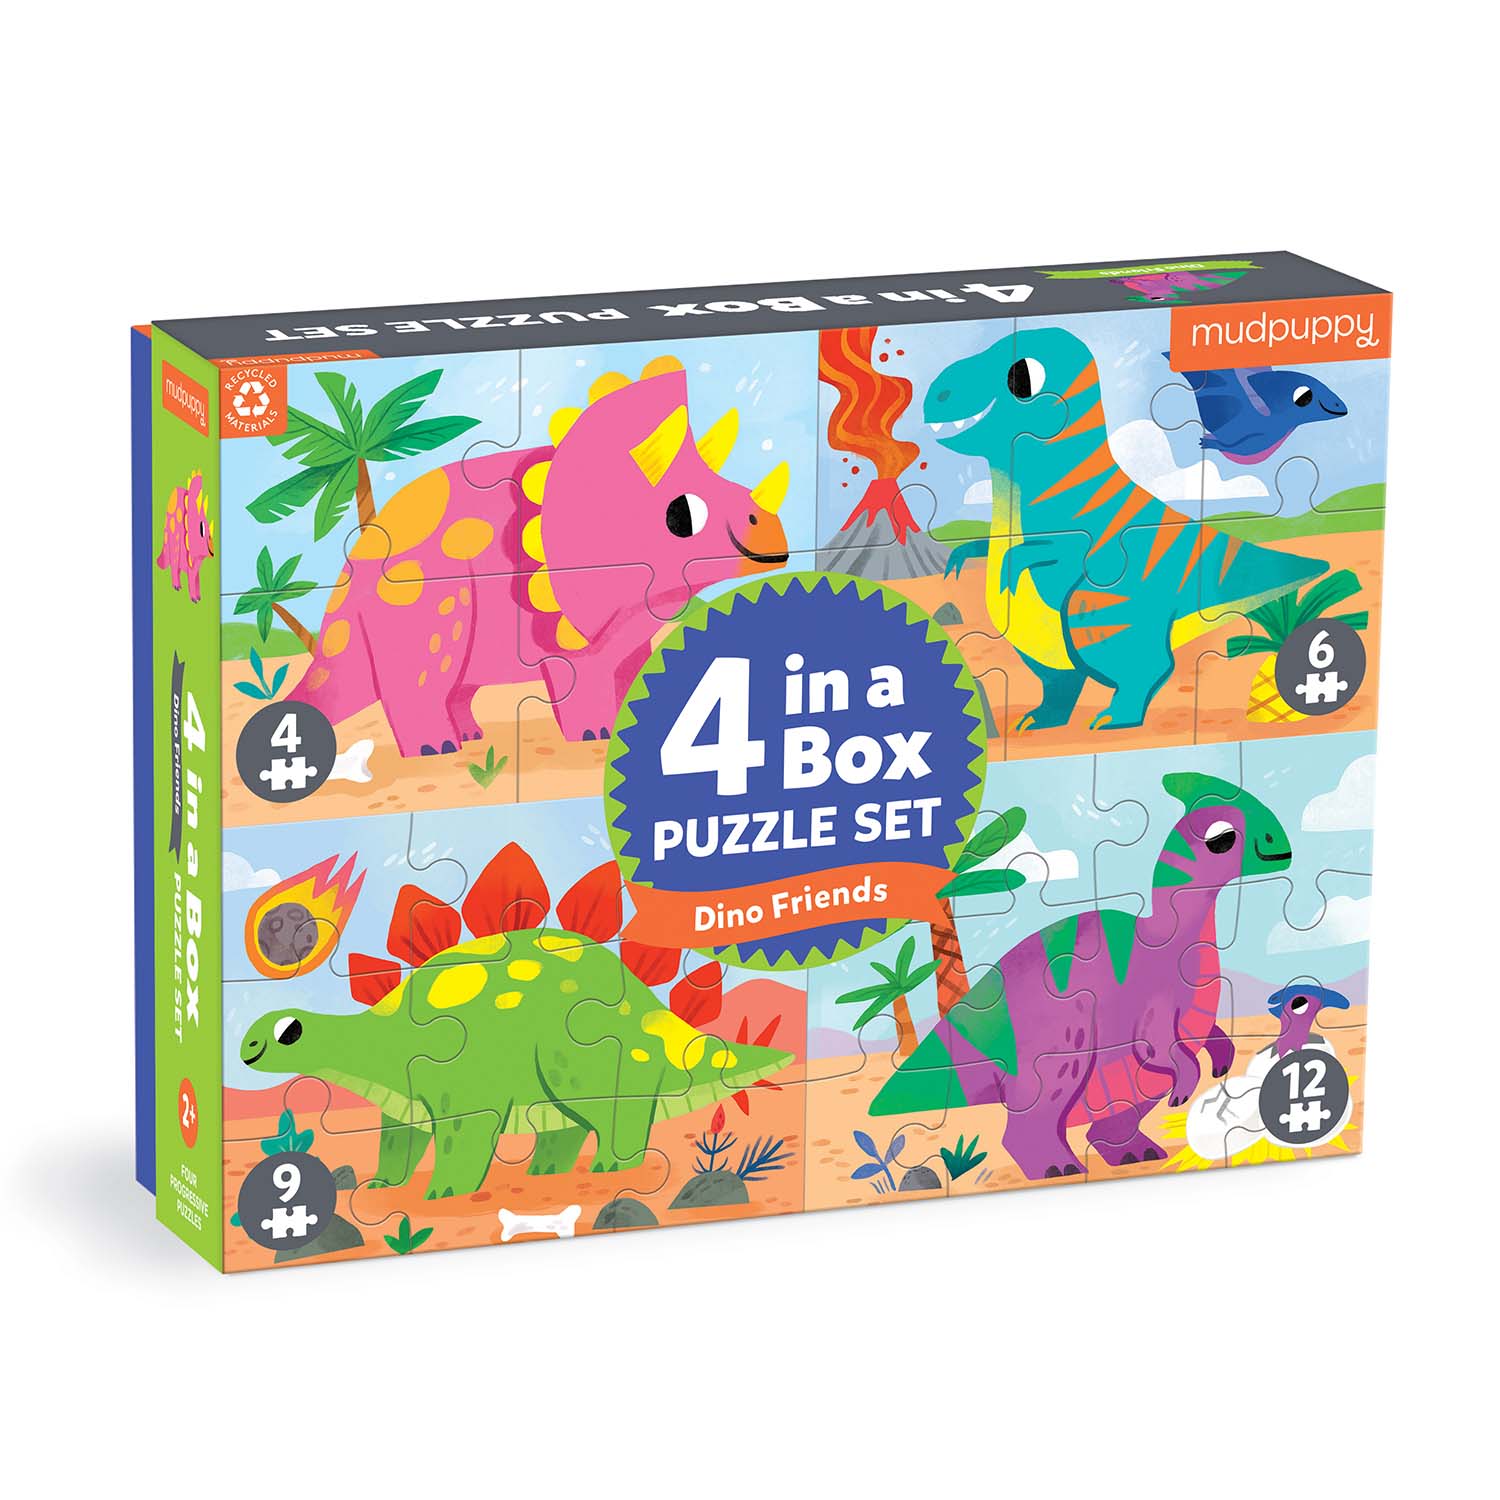 Dino Friends Box Set Dinosaurs Jigsaw Puzzle